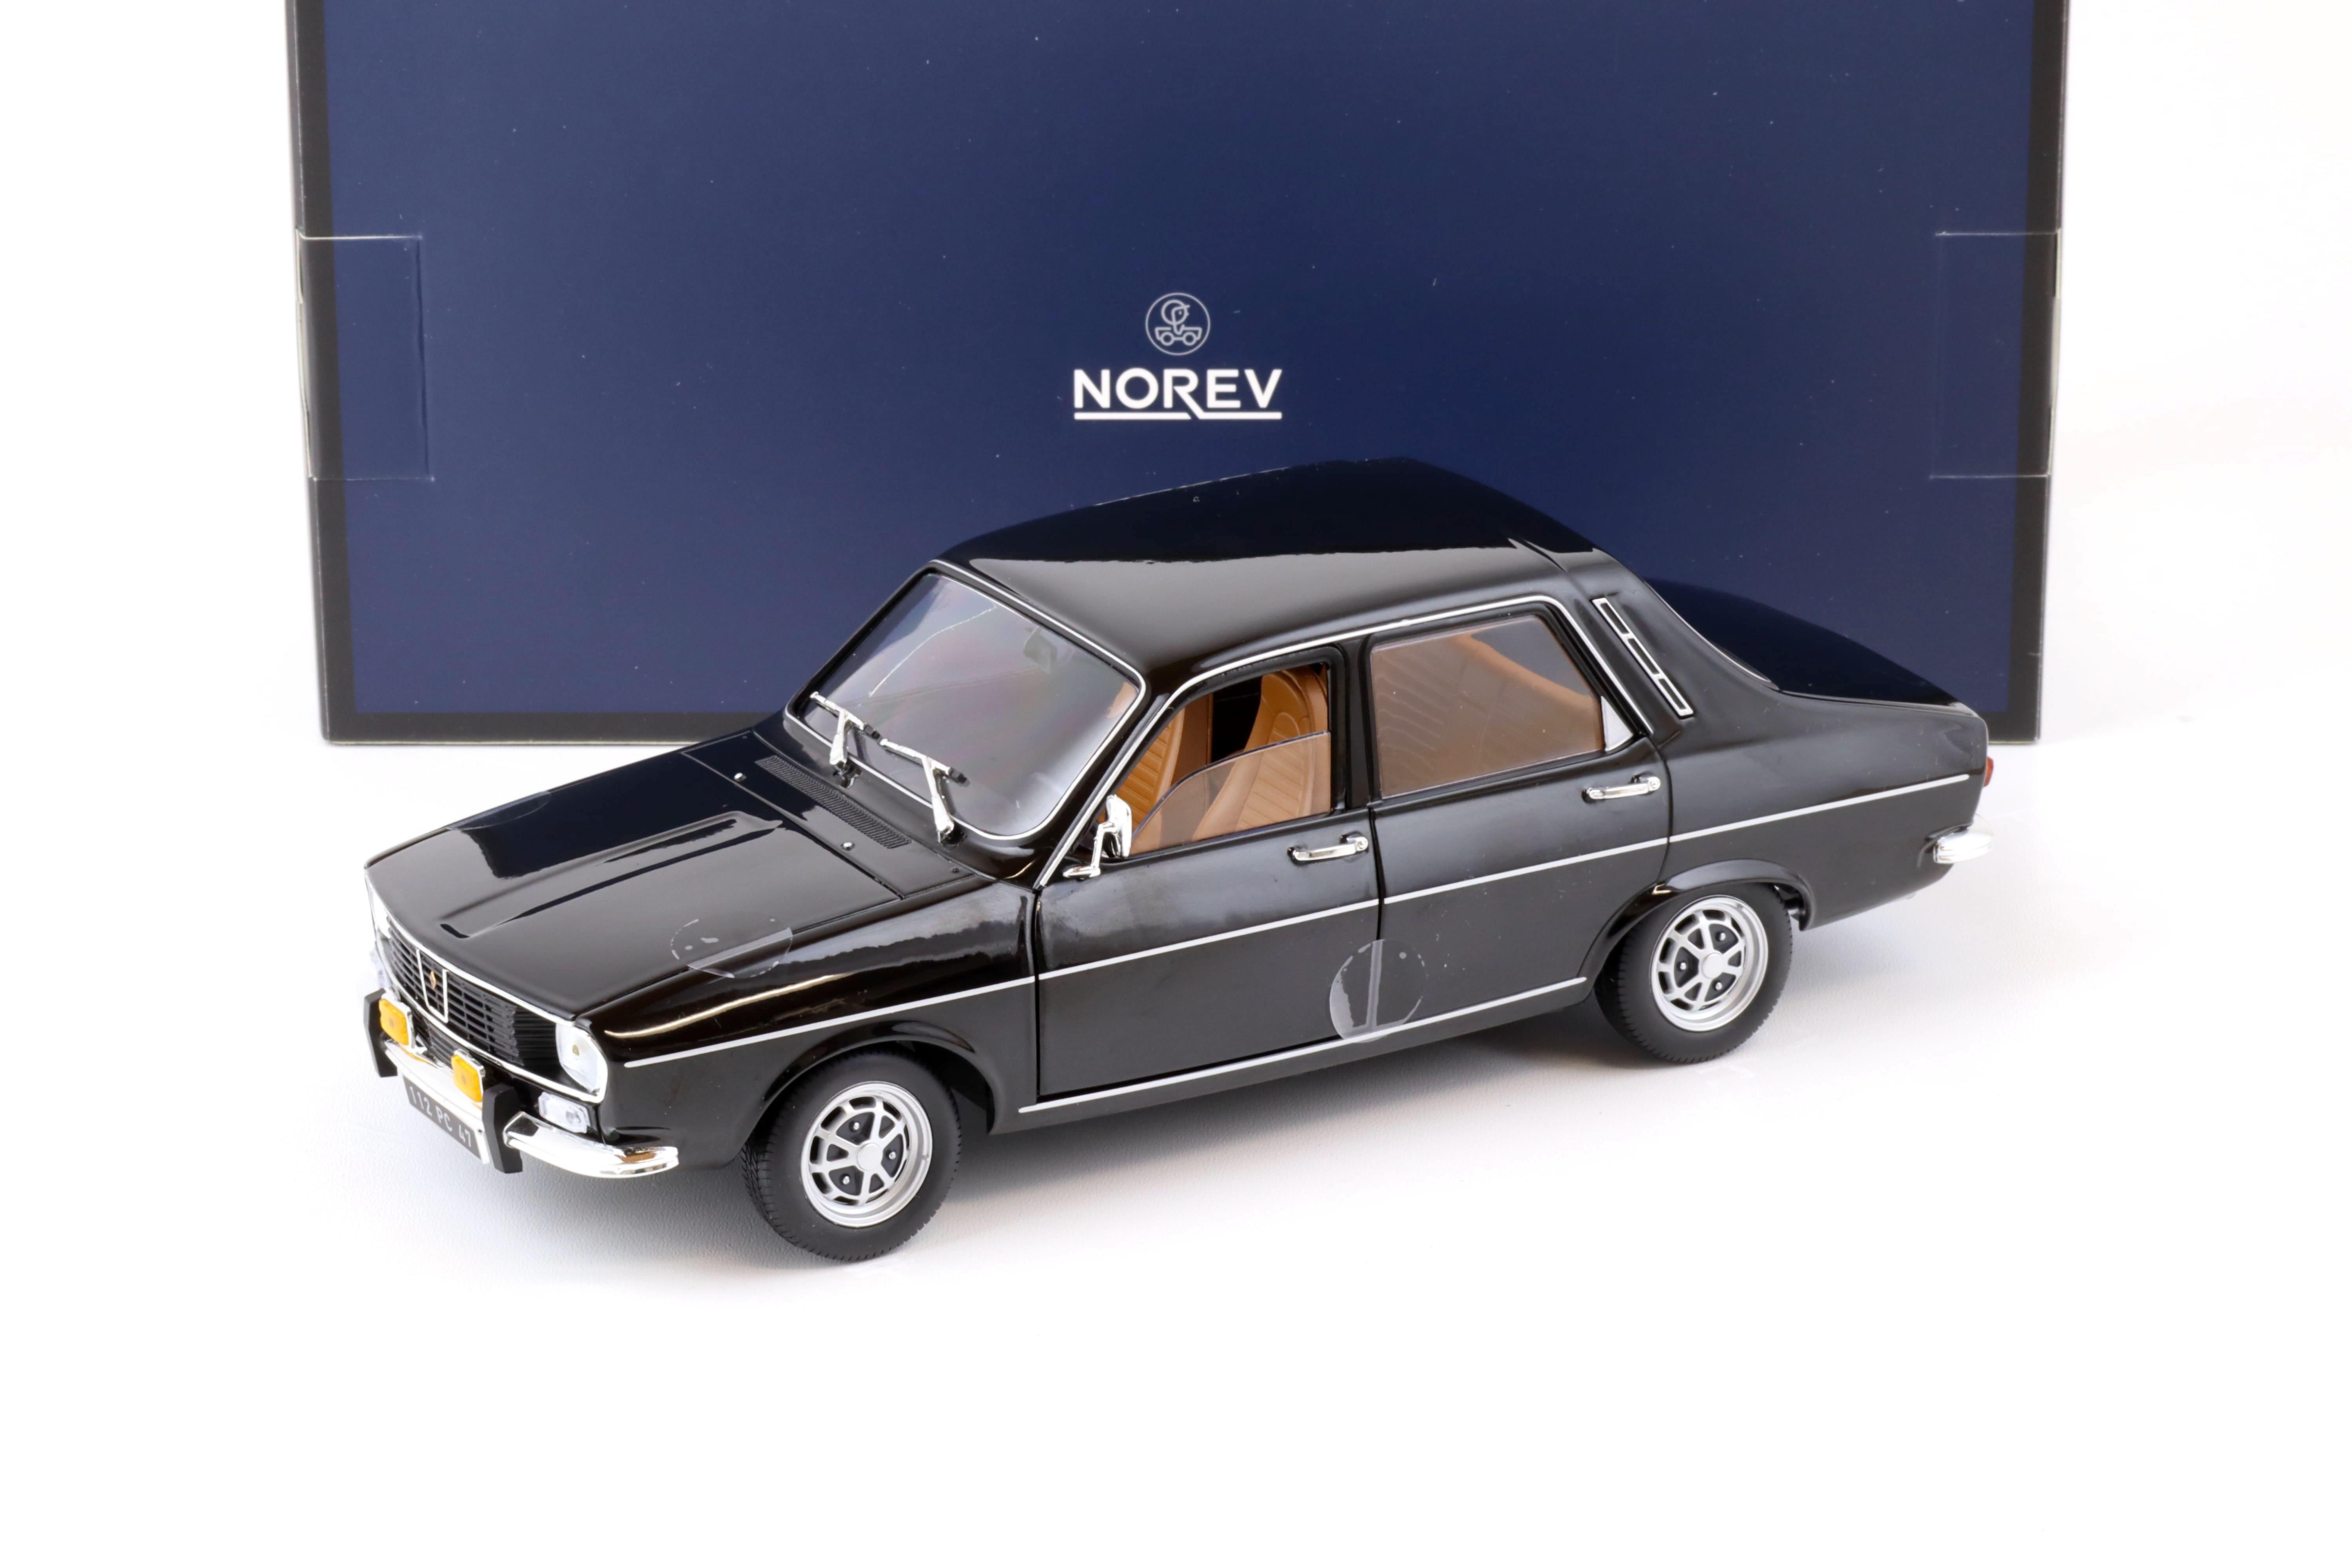 1:18 Norev Renault 12 TS 1973 black - Limited 400 pcs.